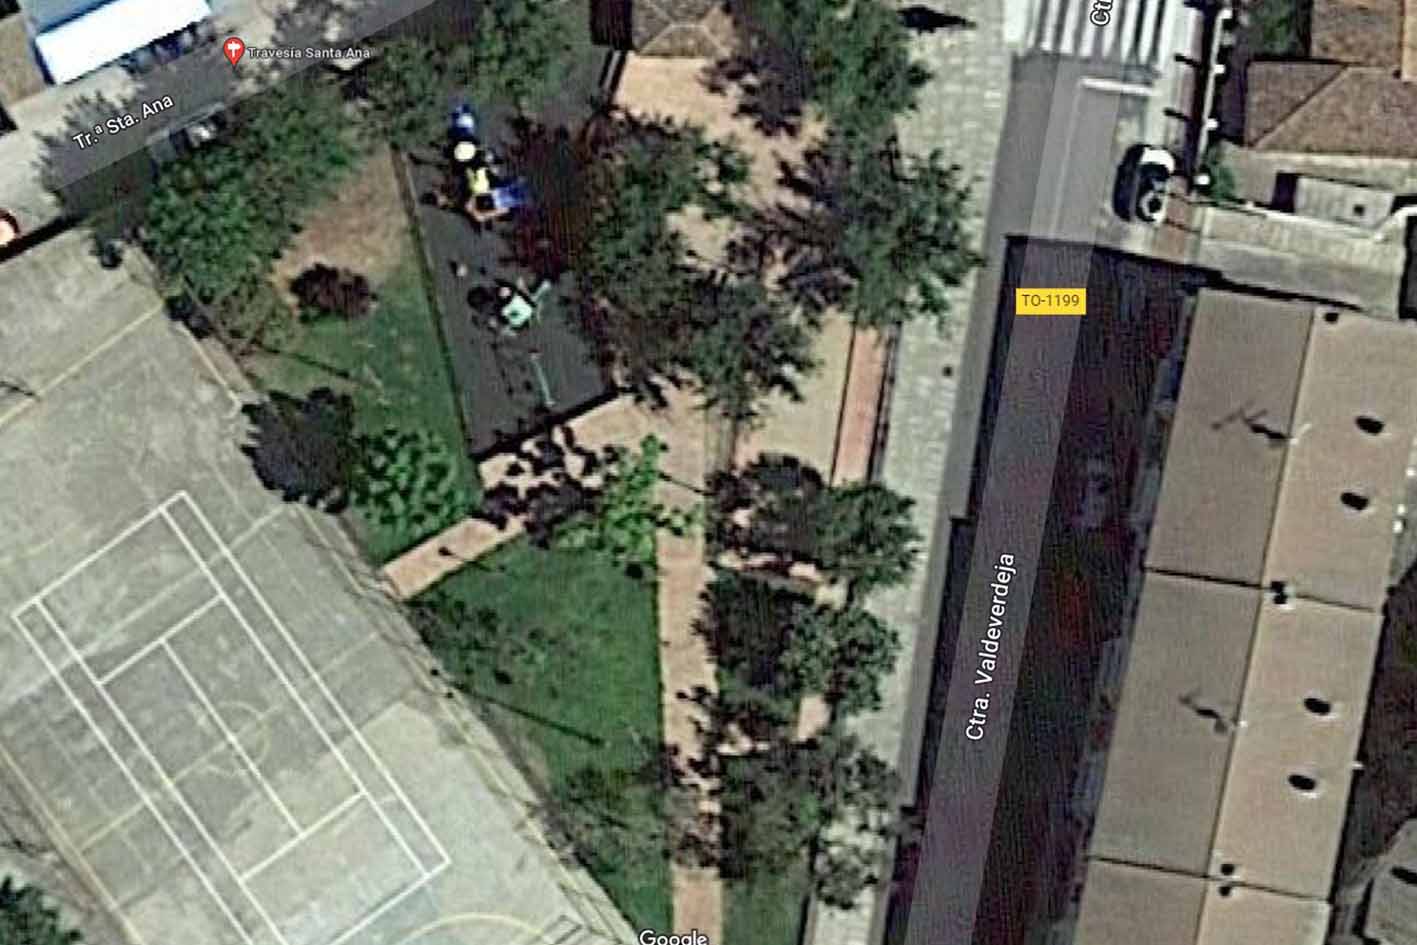 Herido por arma blanca en la Plaza de Santa Ana de Torrico (Toledo). Imagen: Google Maps.